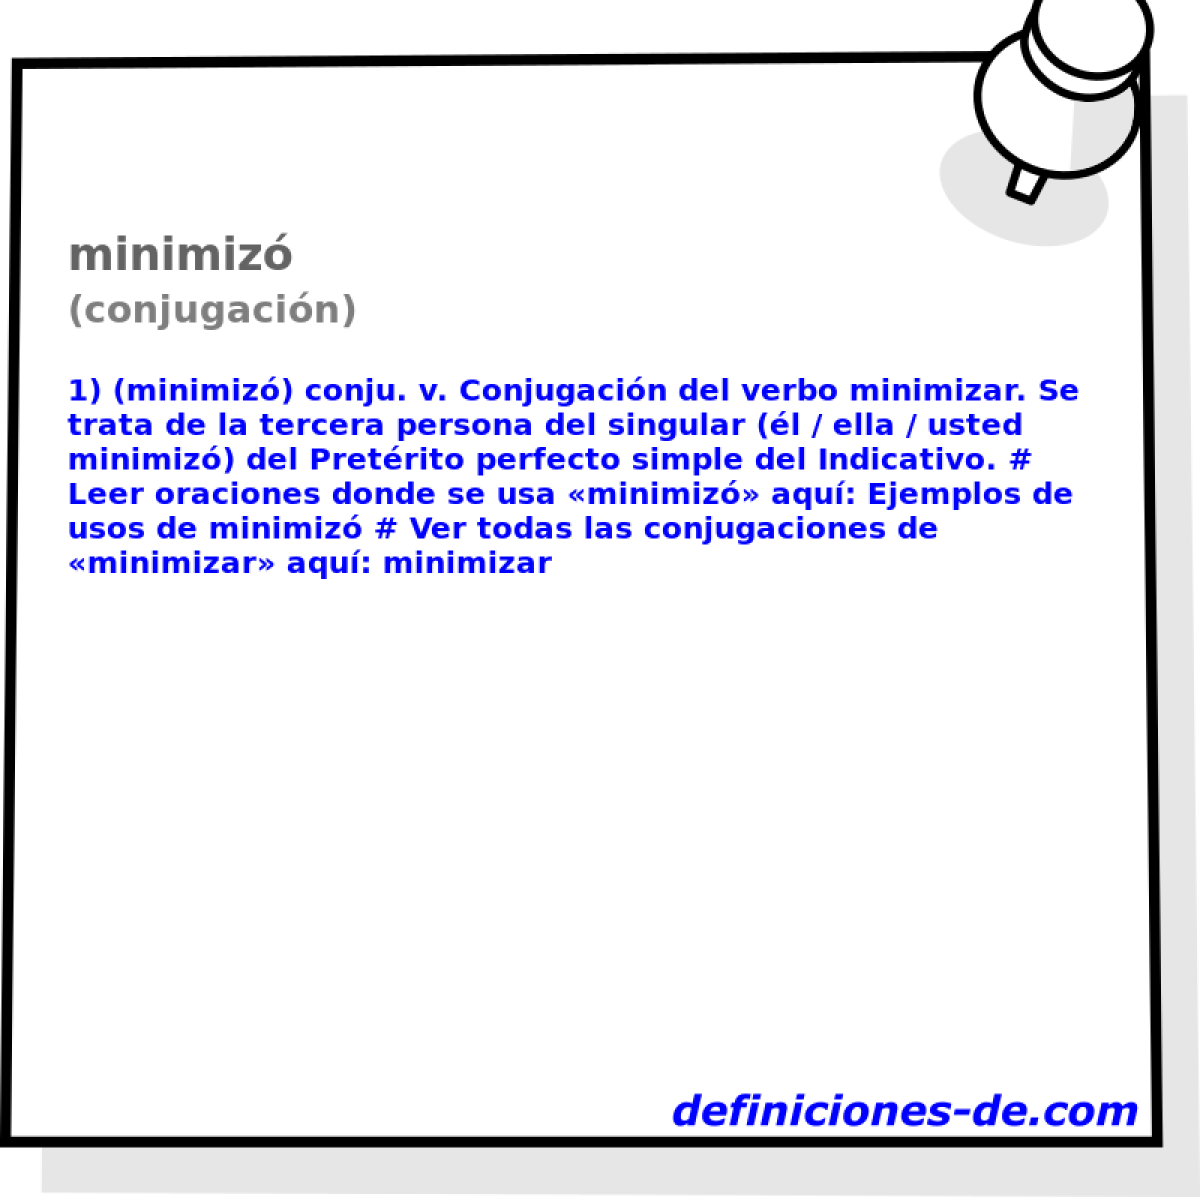 minimiz (conjugacin)